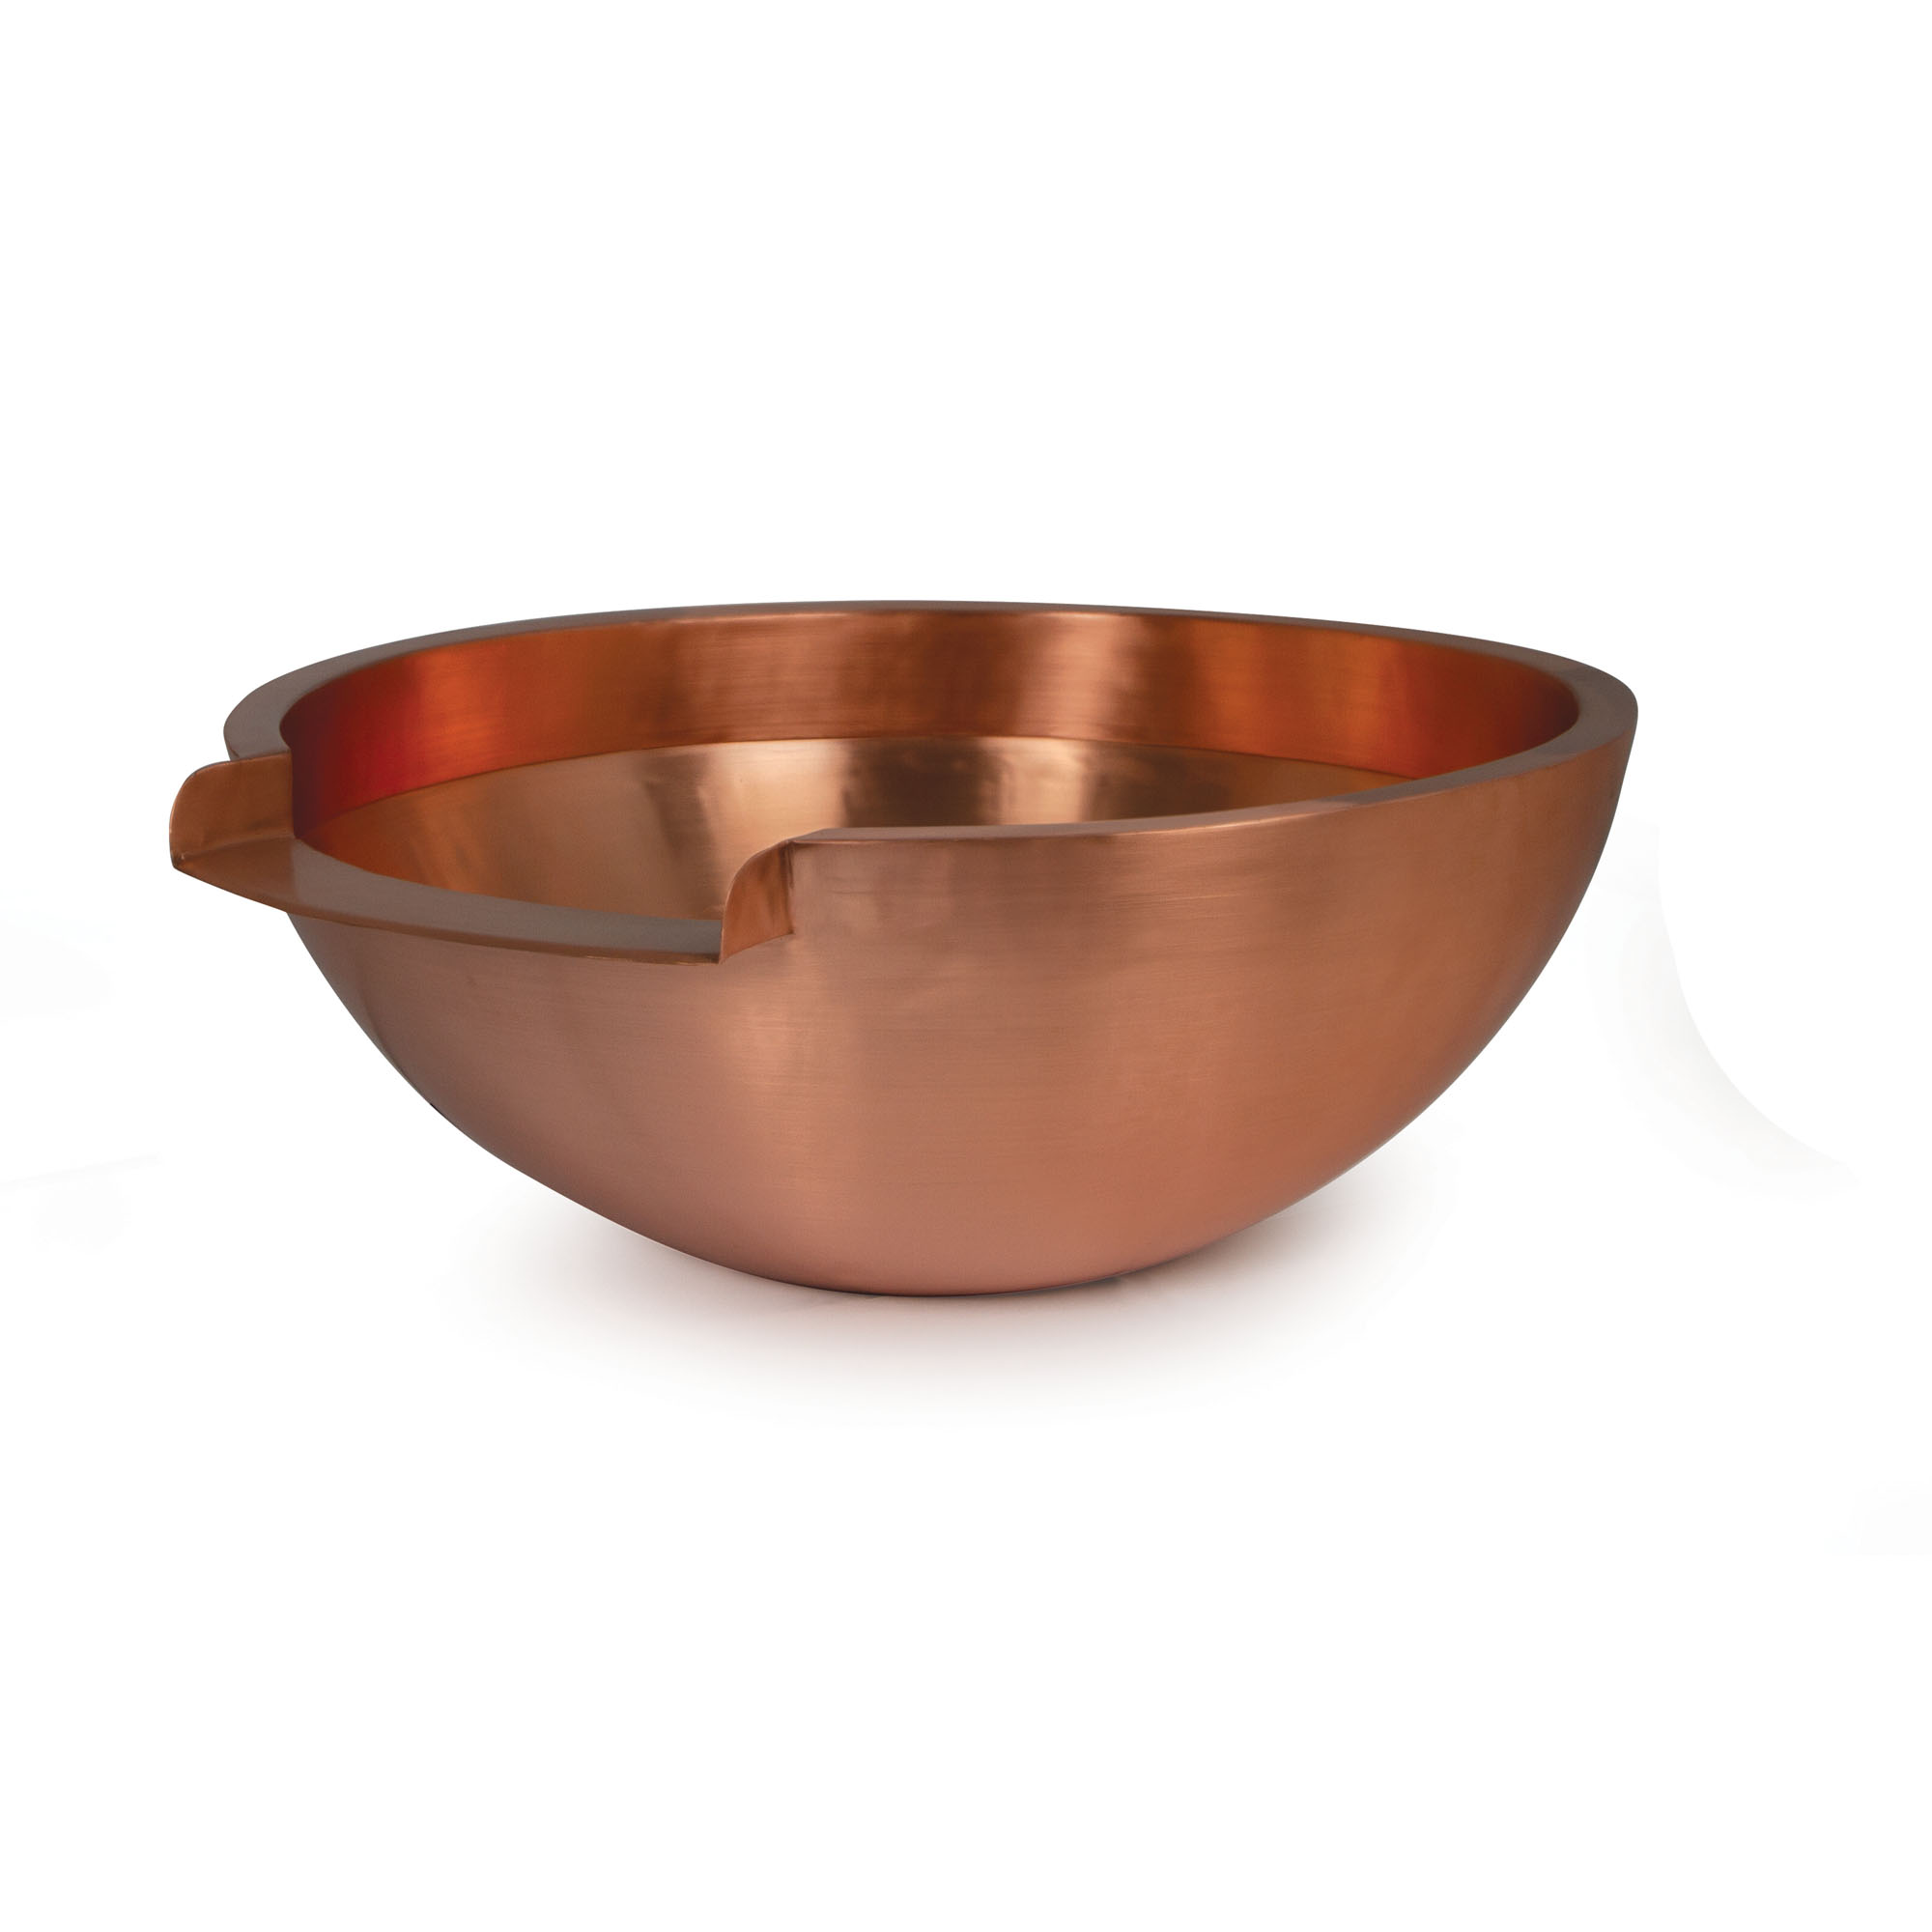 26" Round Copper Bowl w/ Grey Liner